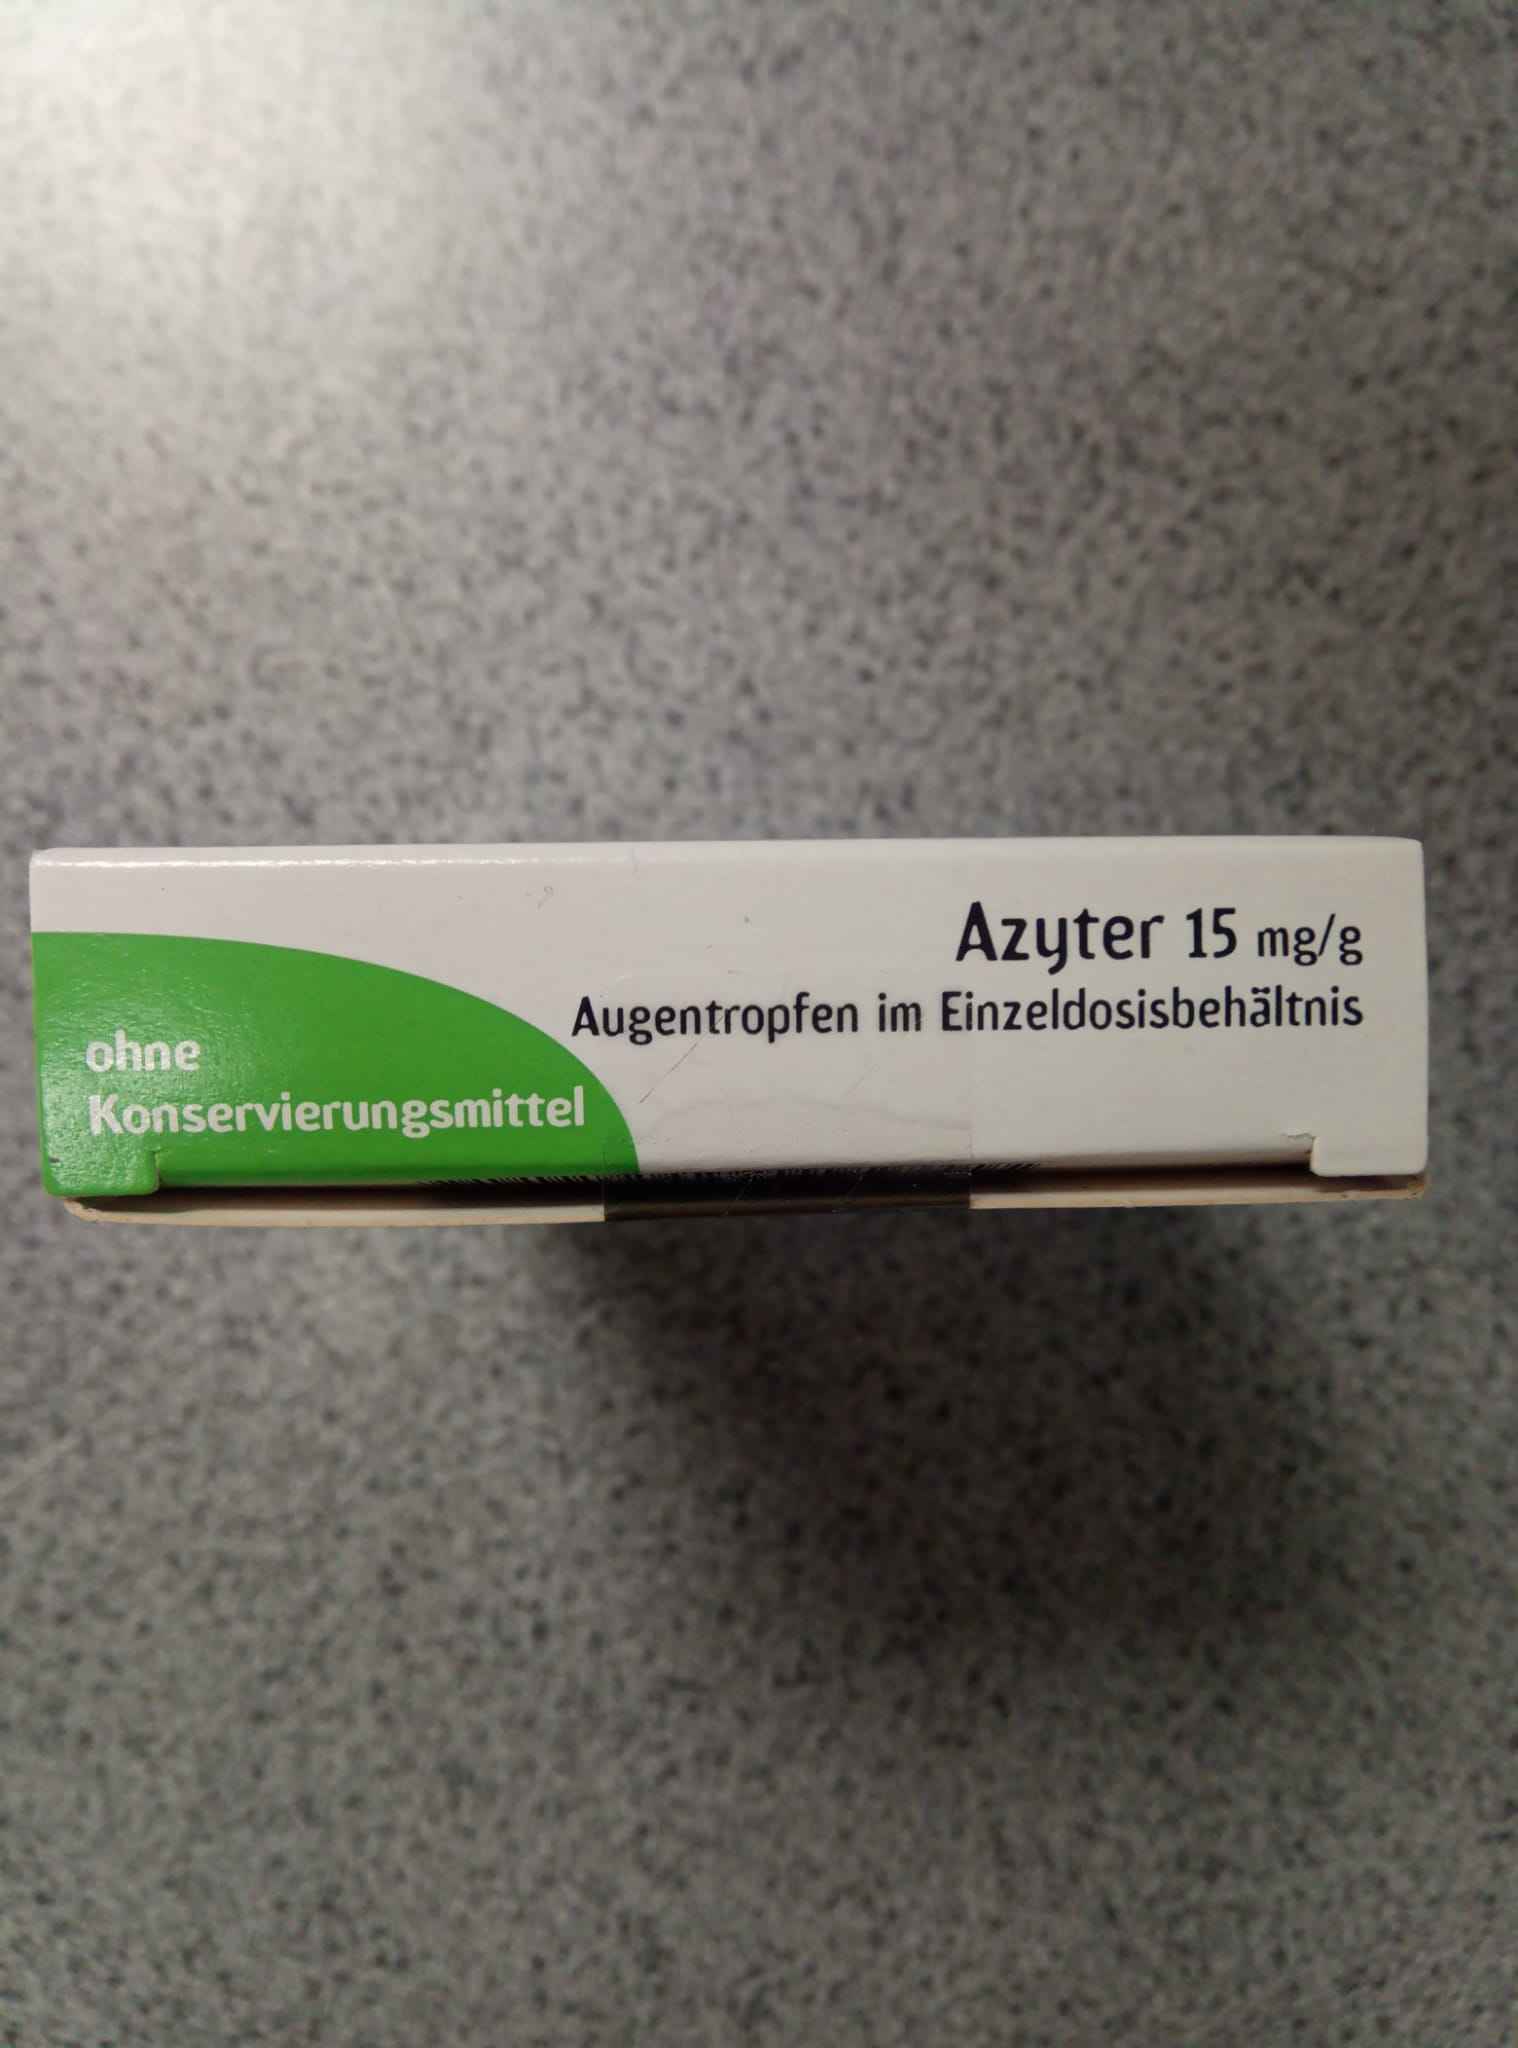 阿奇霉素滴眼液 Azithromycin Eye Drops  商品名：Azyter